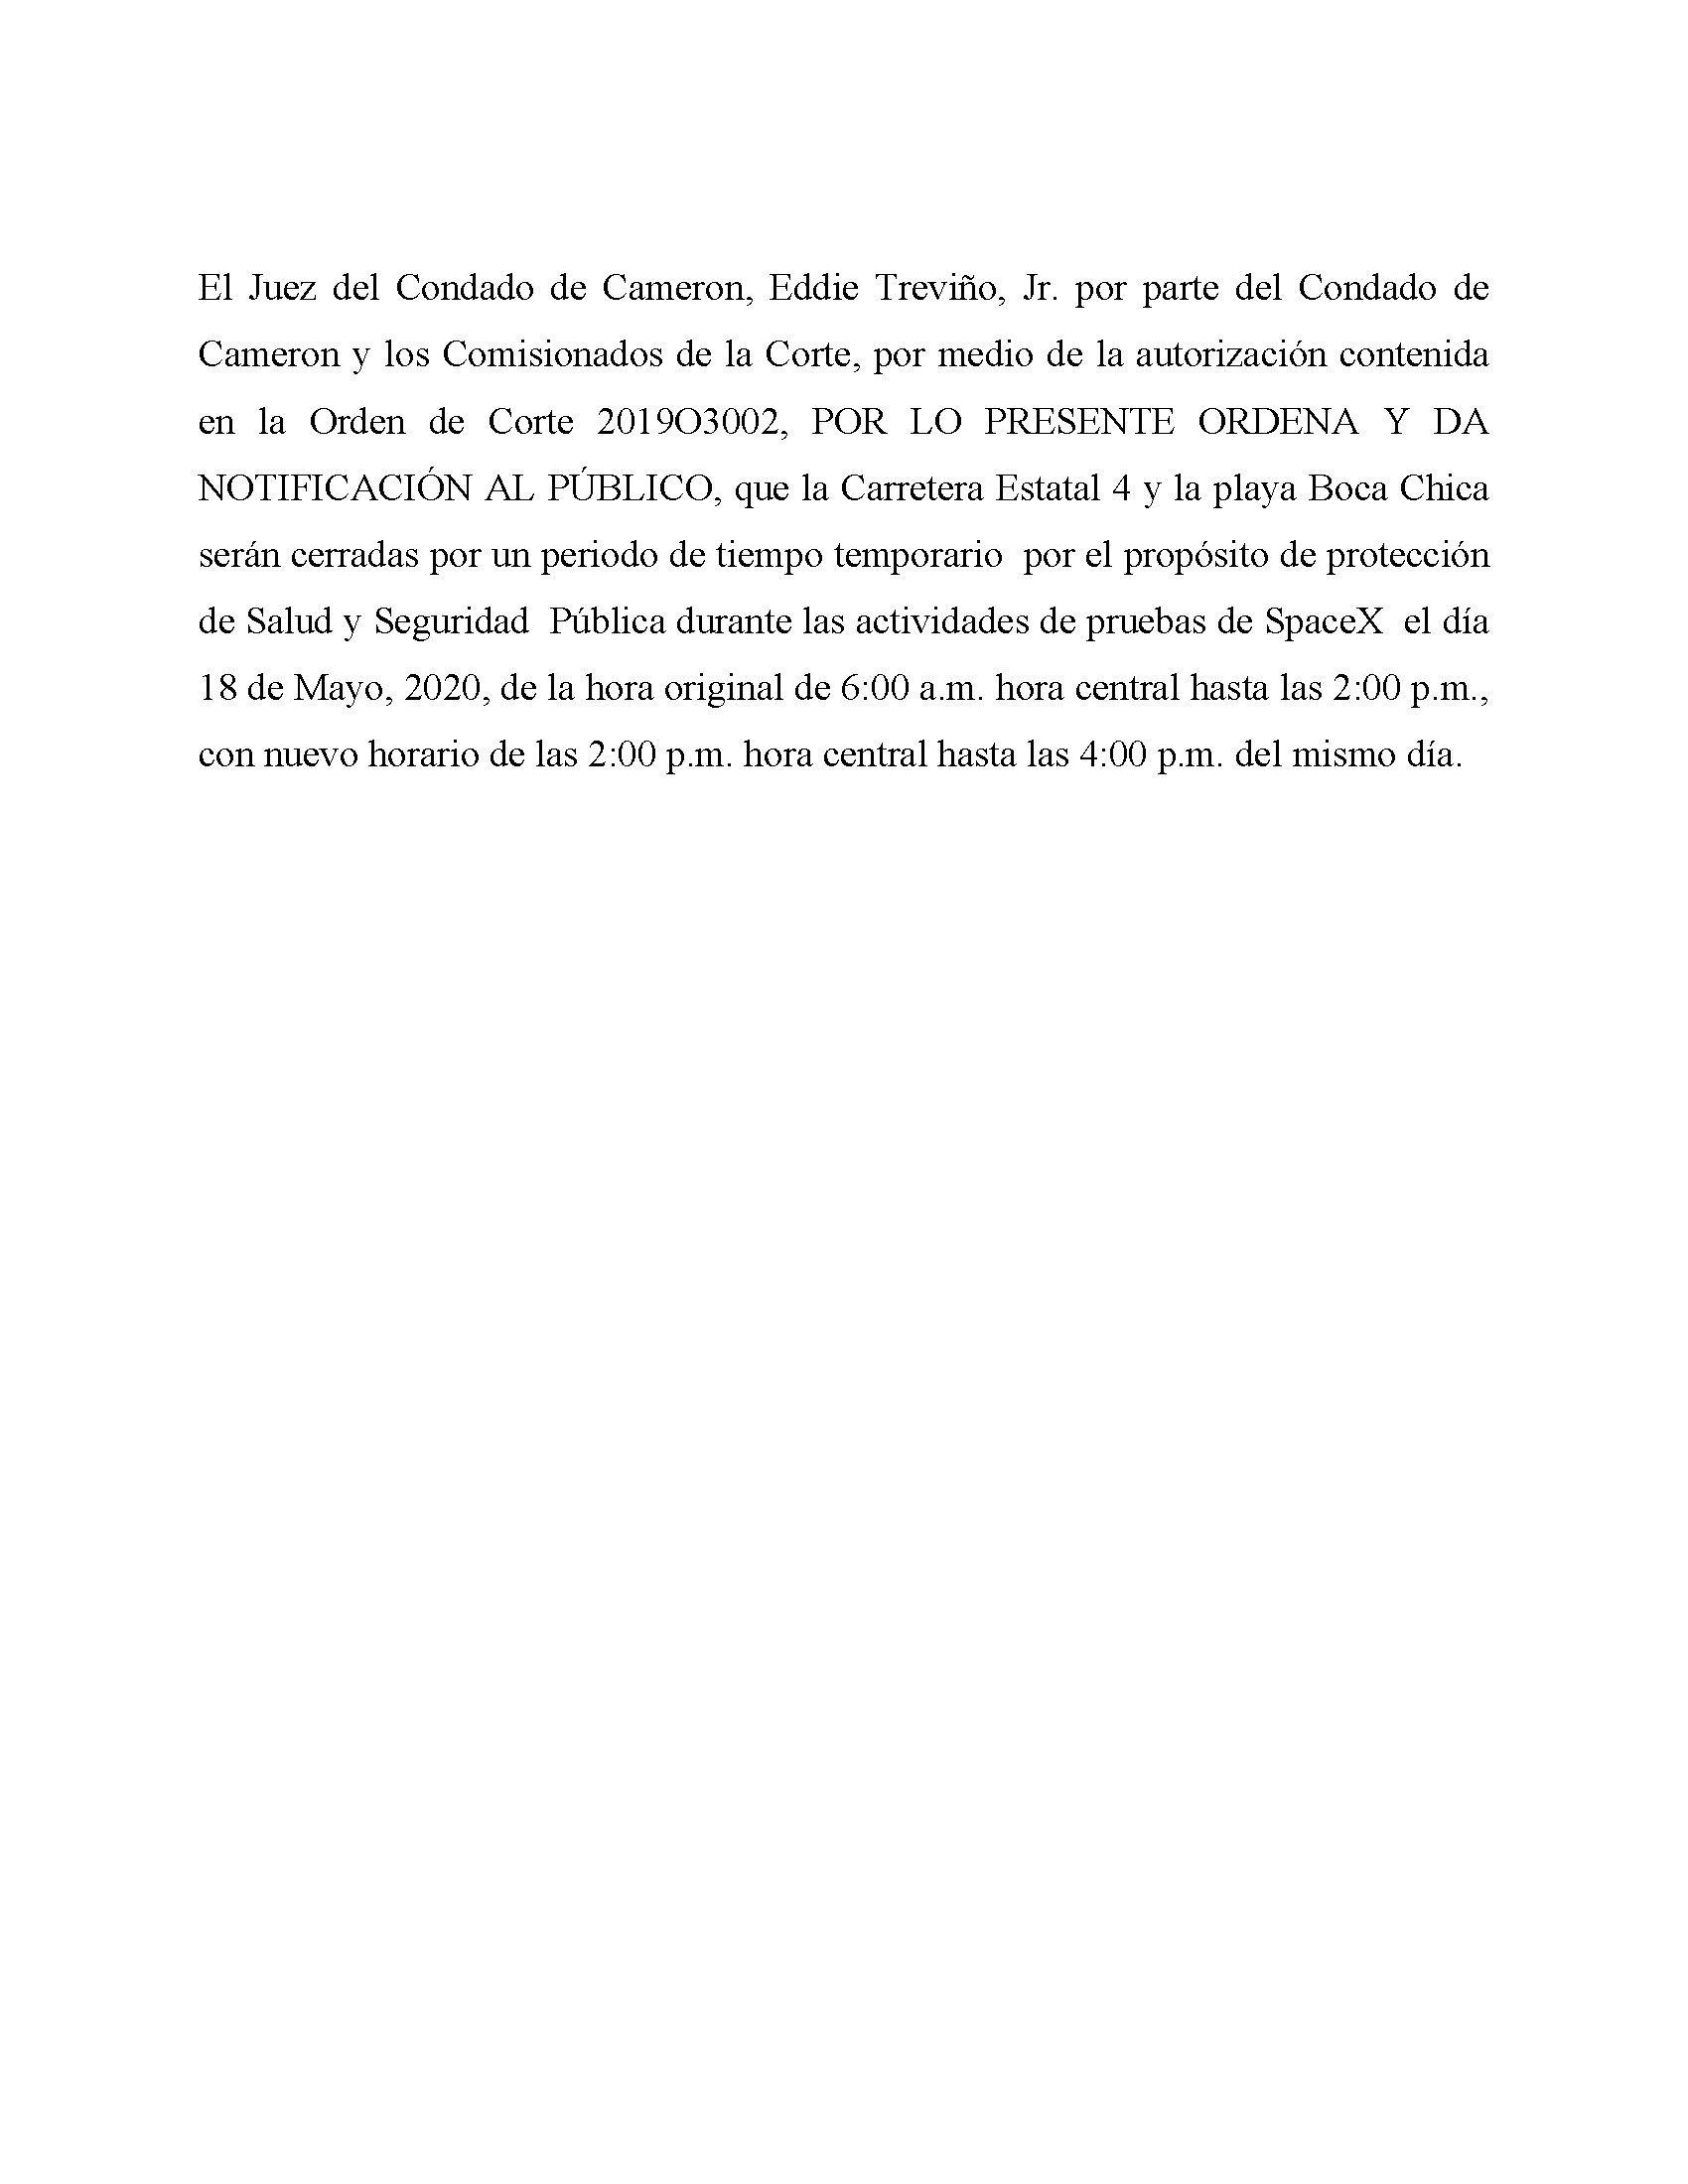 ORDER.CLOSURE OF HIGHWAY 4 Y LA PLAYA BOCA CHICA.SPANISH.05.18.20